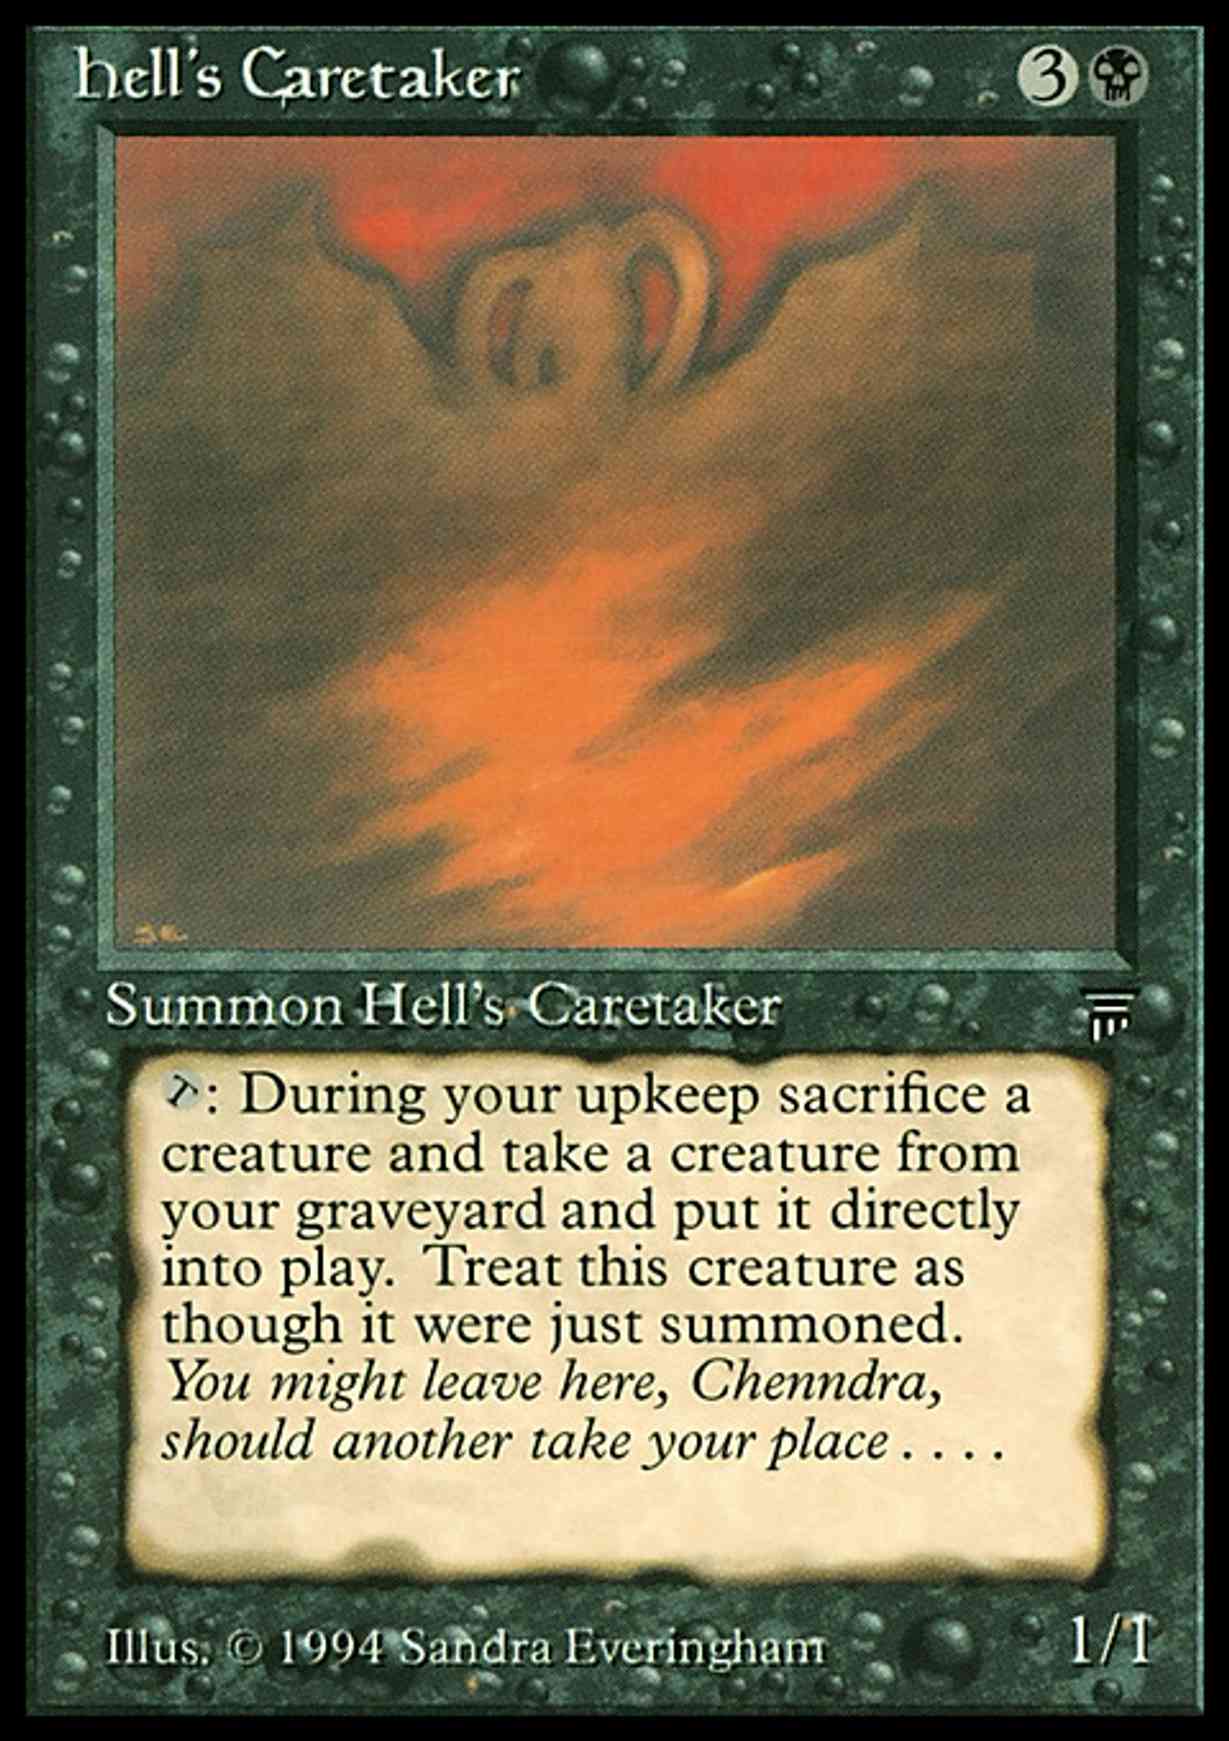 Hell's Caretaker magic card front